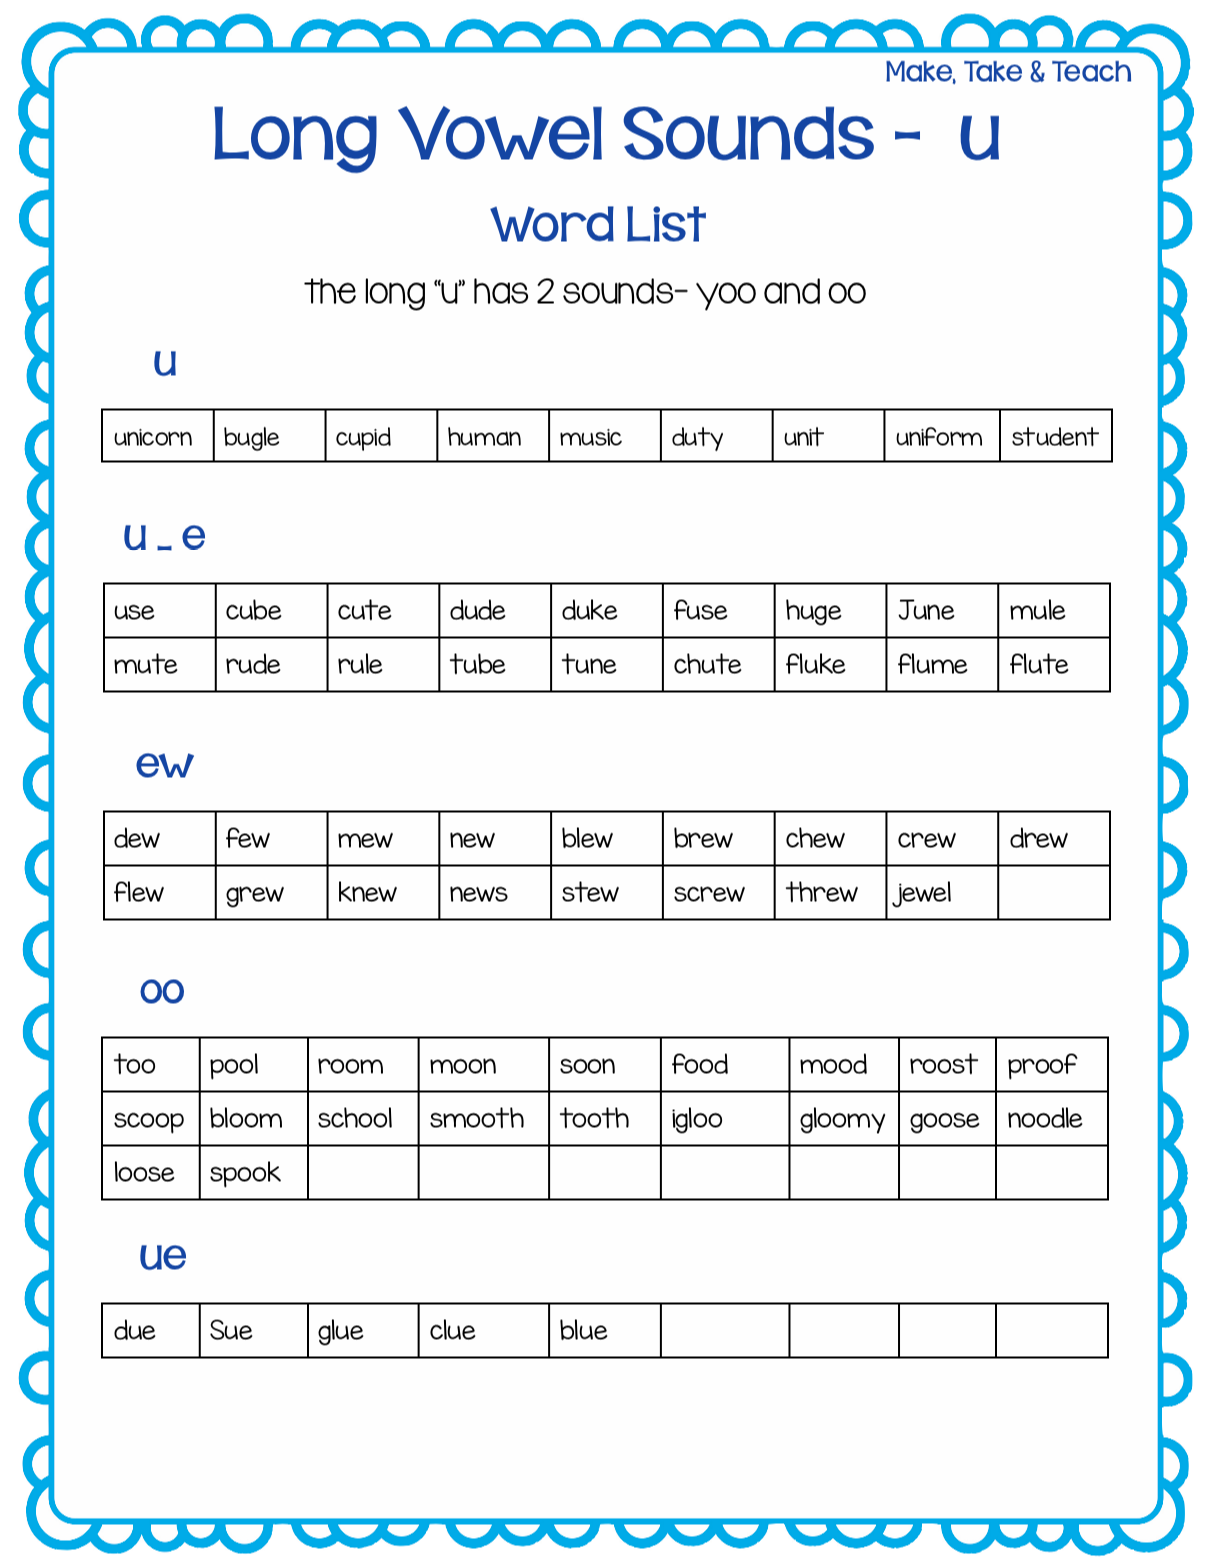 FREE Long Vowel Spelling Word Lists - Make Take & Teach